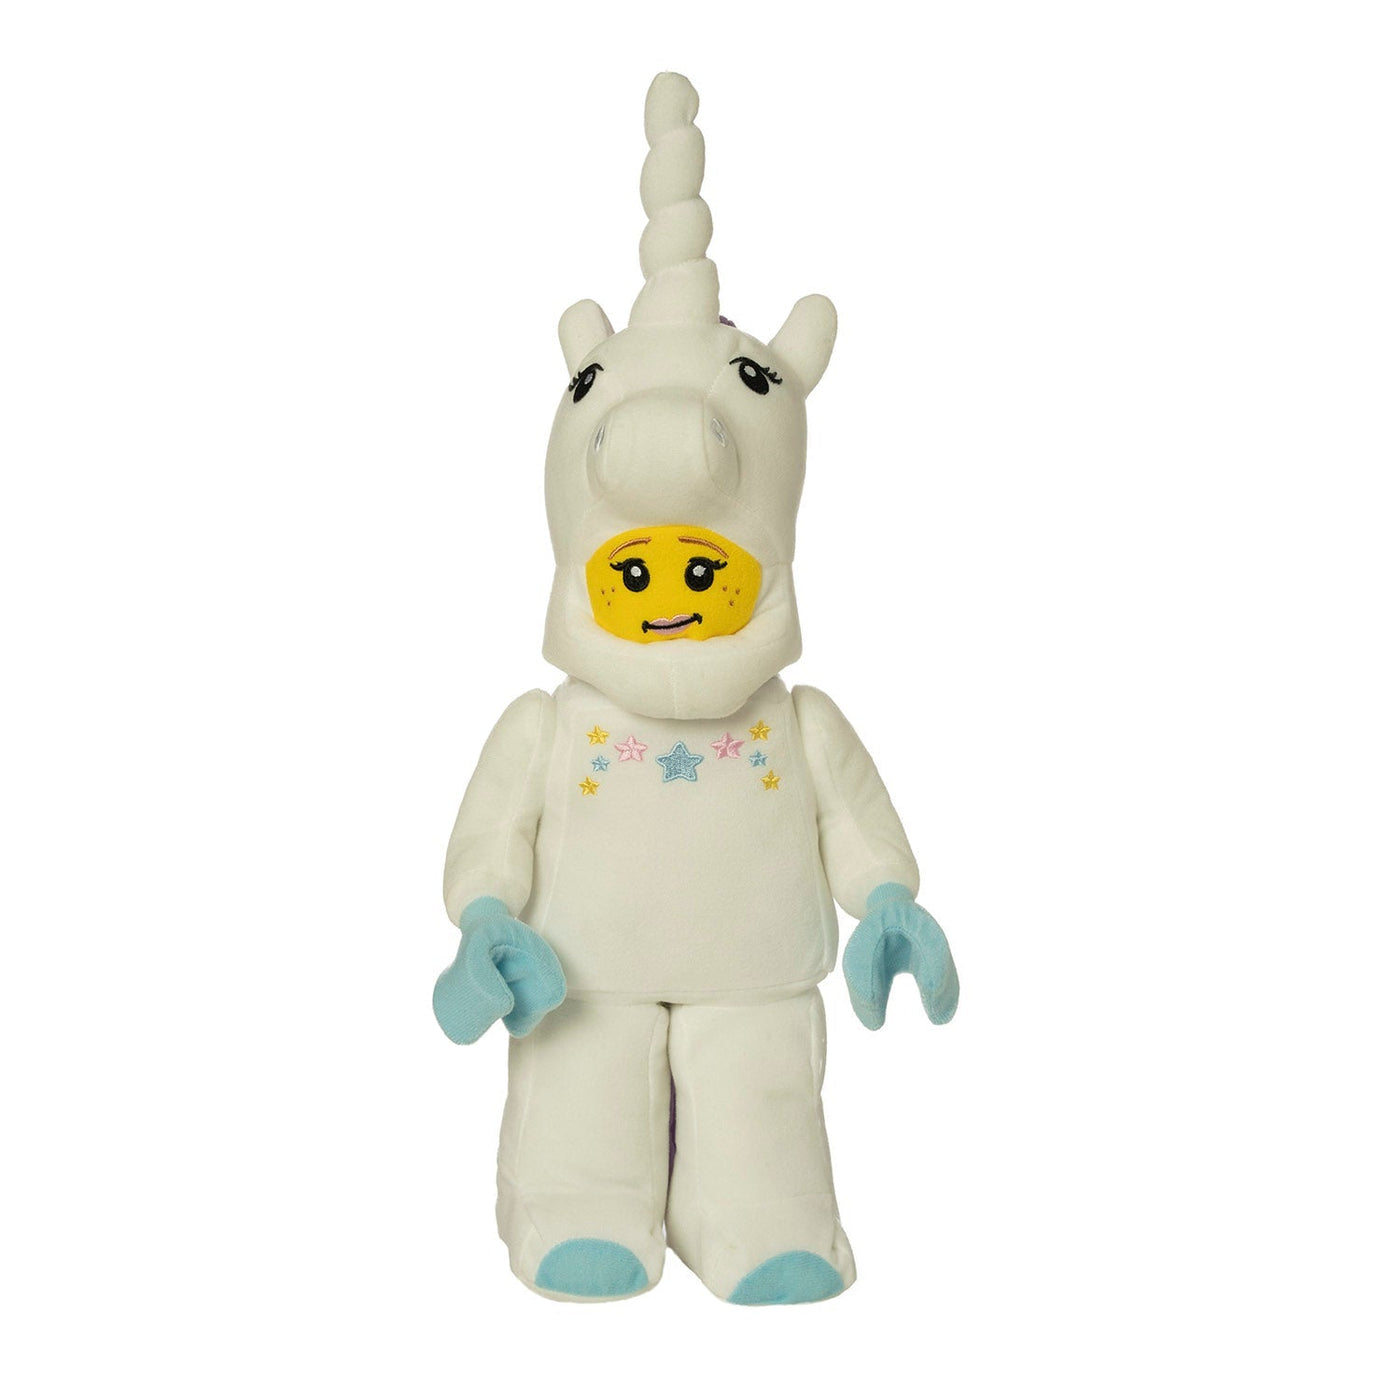 LEGO Iconic Unicorn by Manhattan Toy